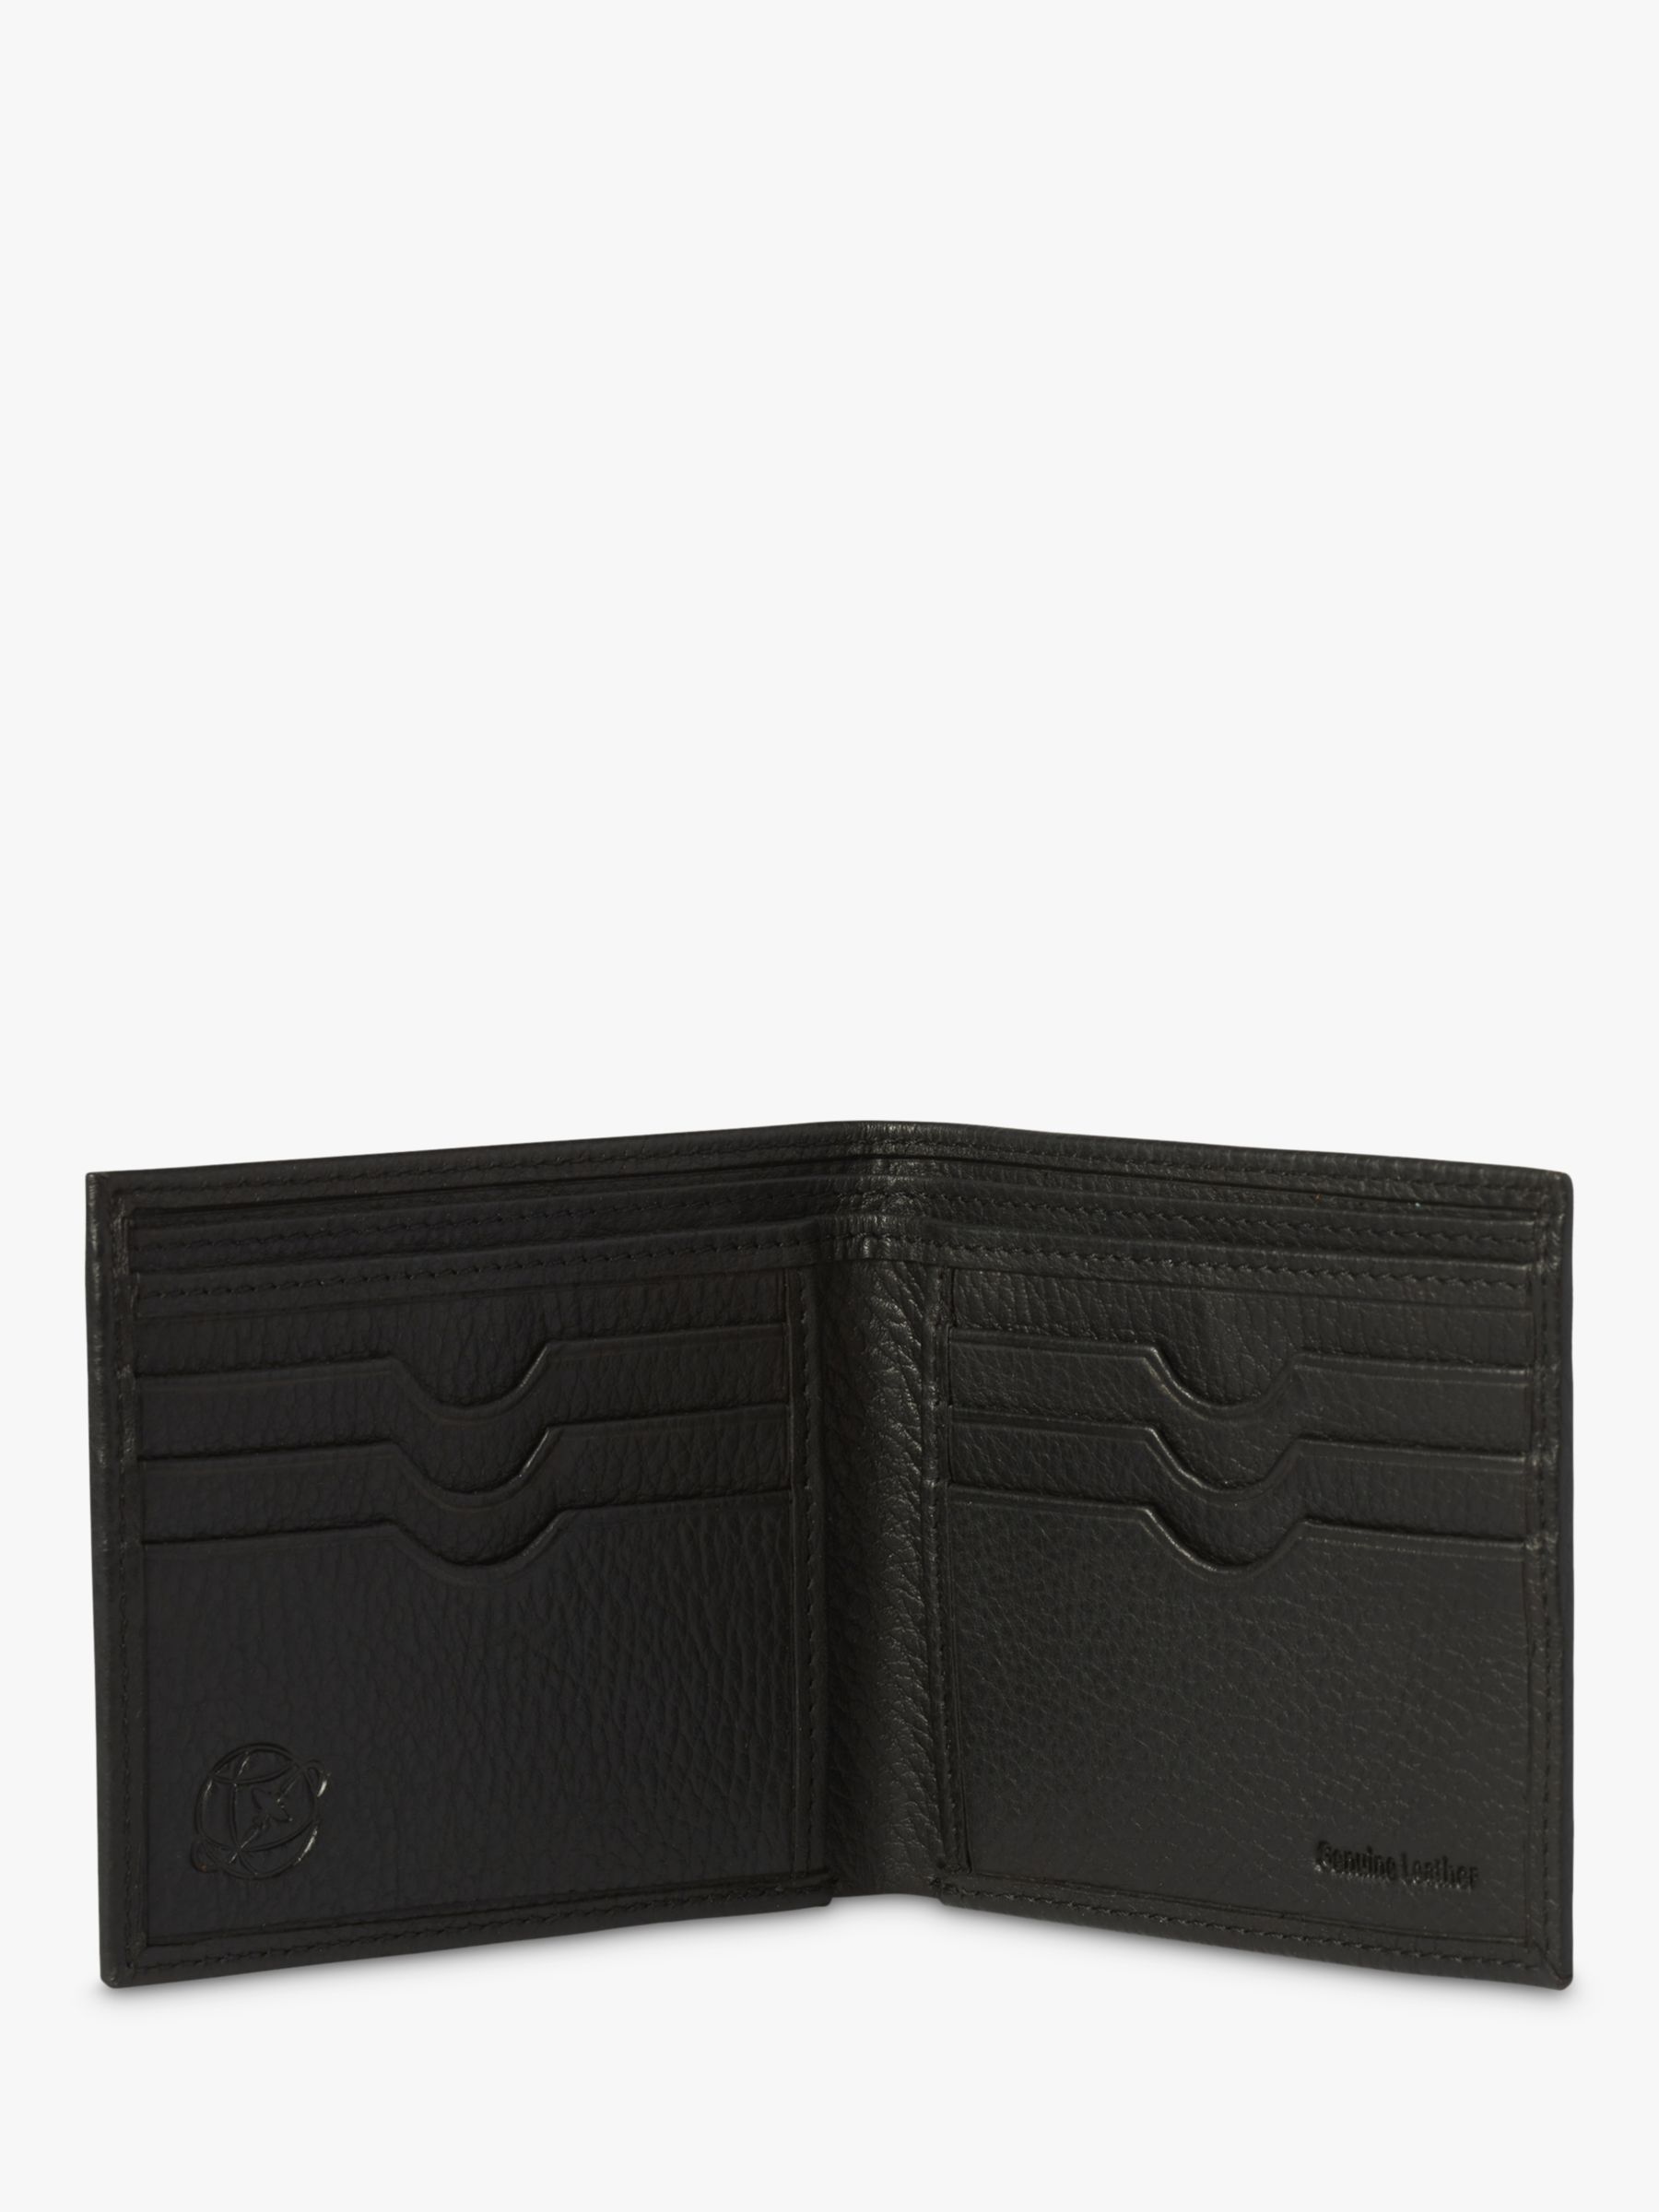 Simon Carter West End Leather Wallet, Black at John Lewis & Partners